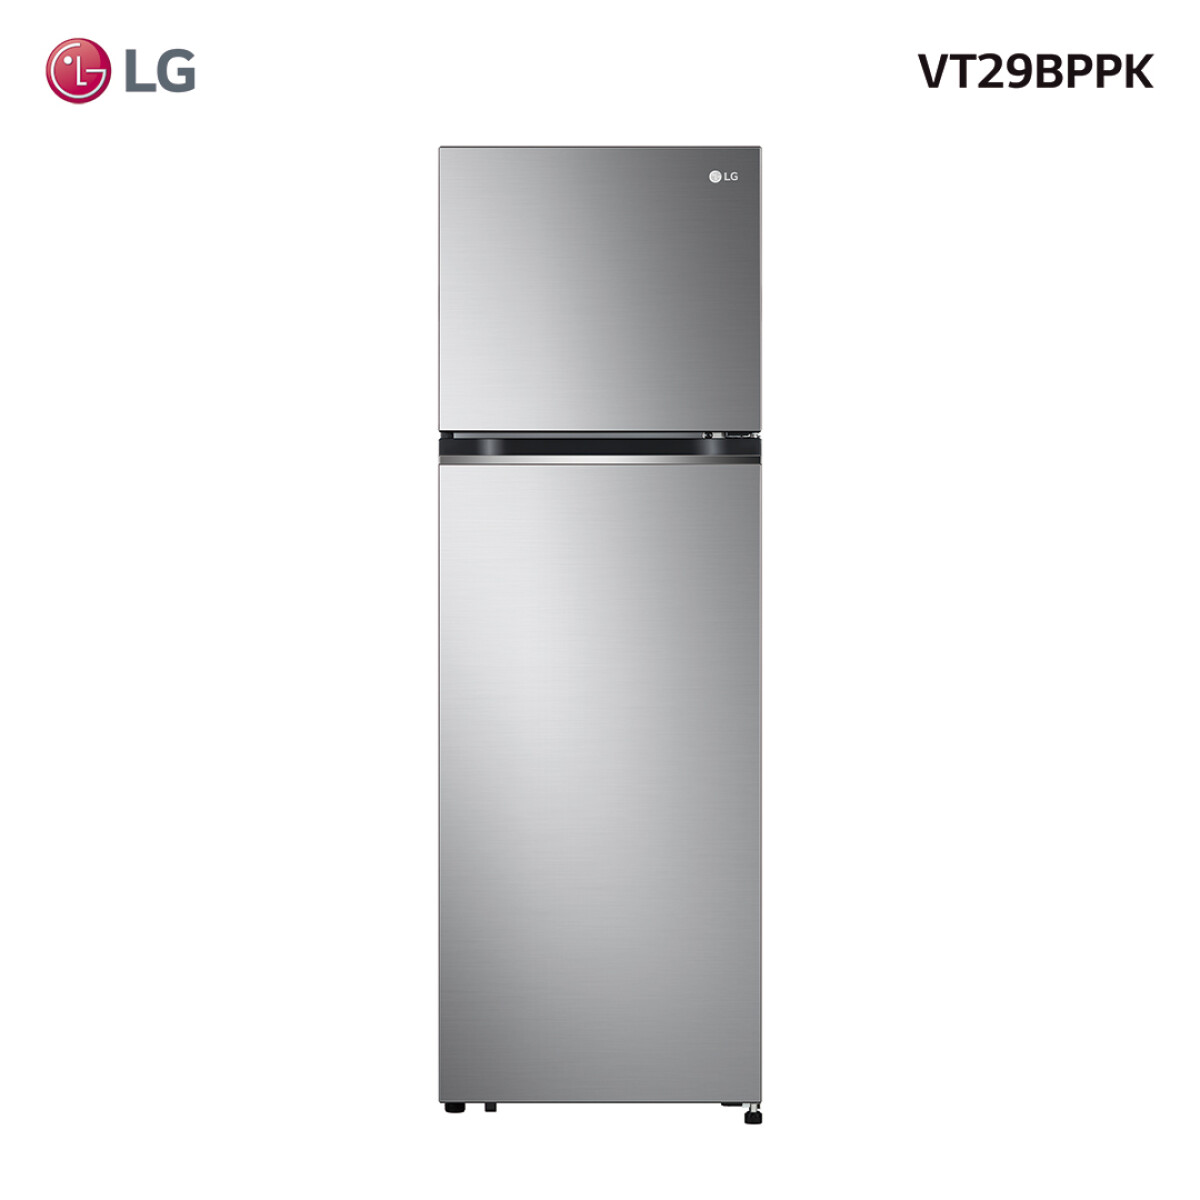 Refrigerador LG inverter 285L VT29BPPK 